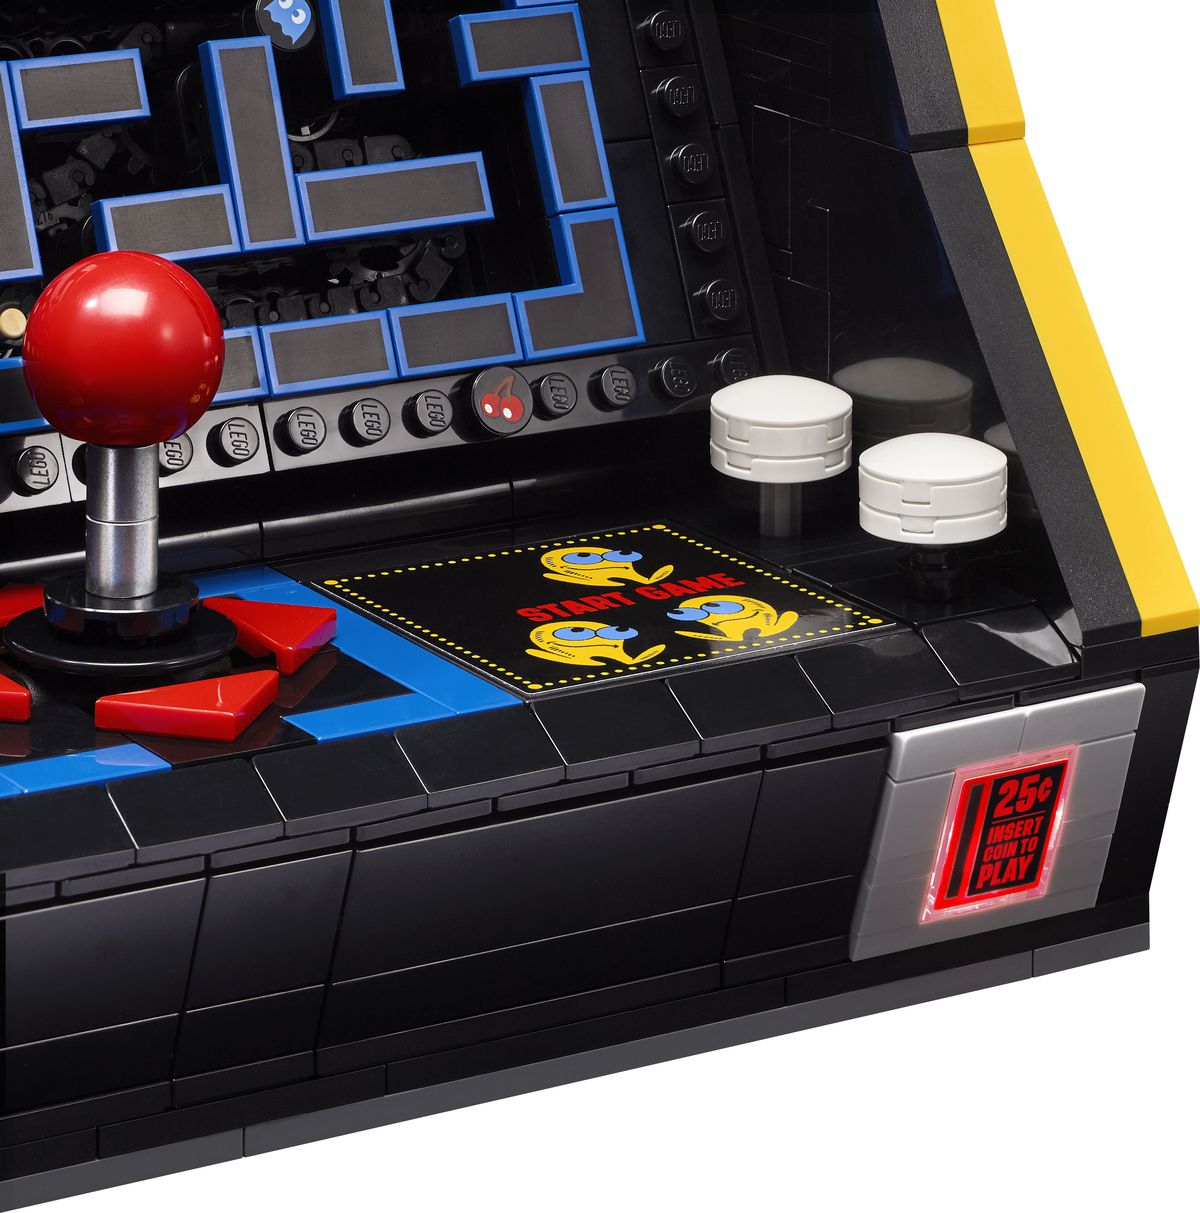 Close up on the Lego Pac-Man’s joystick